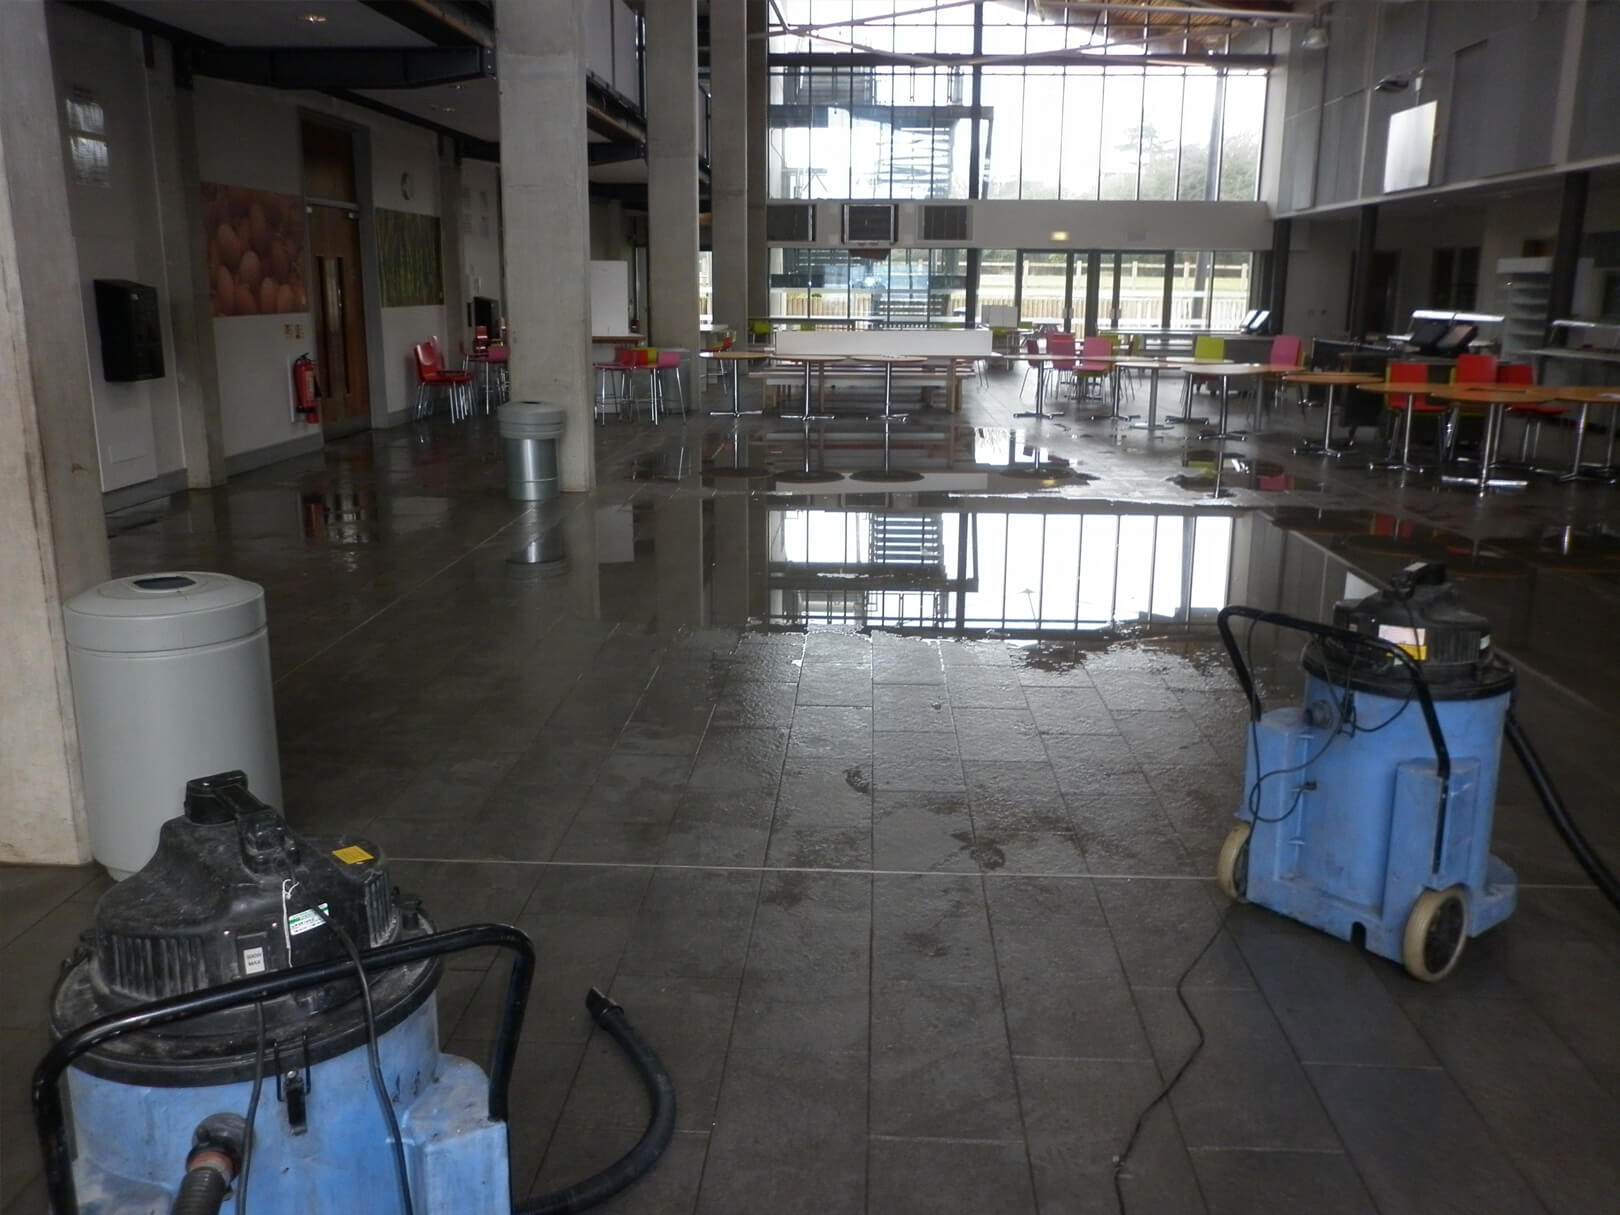 Flood damage cleanup equipment inside large commercial building